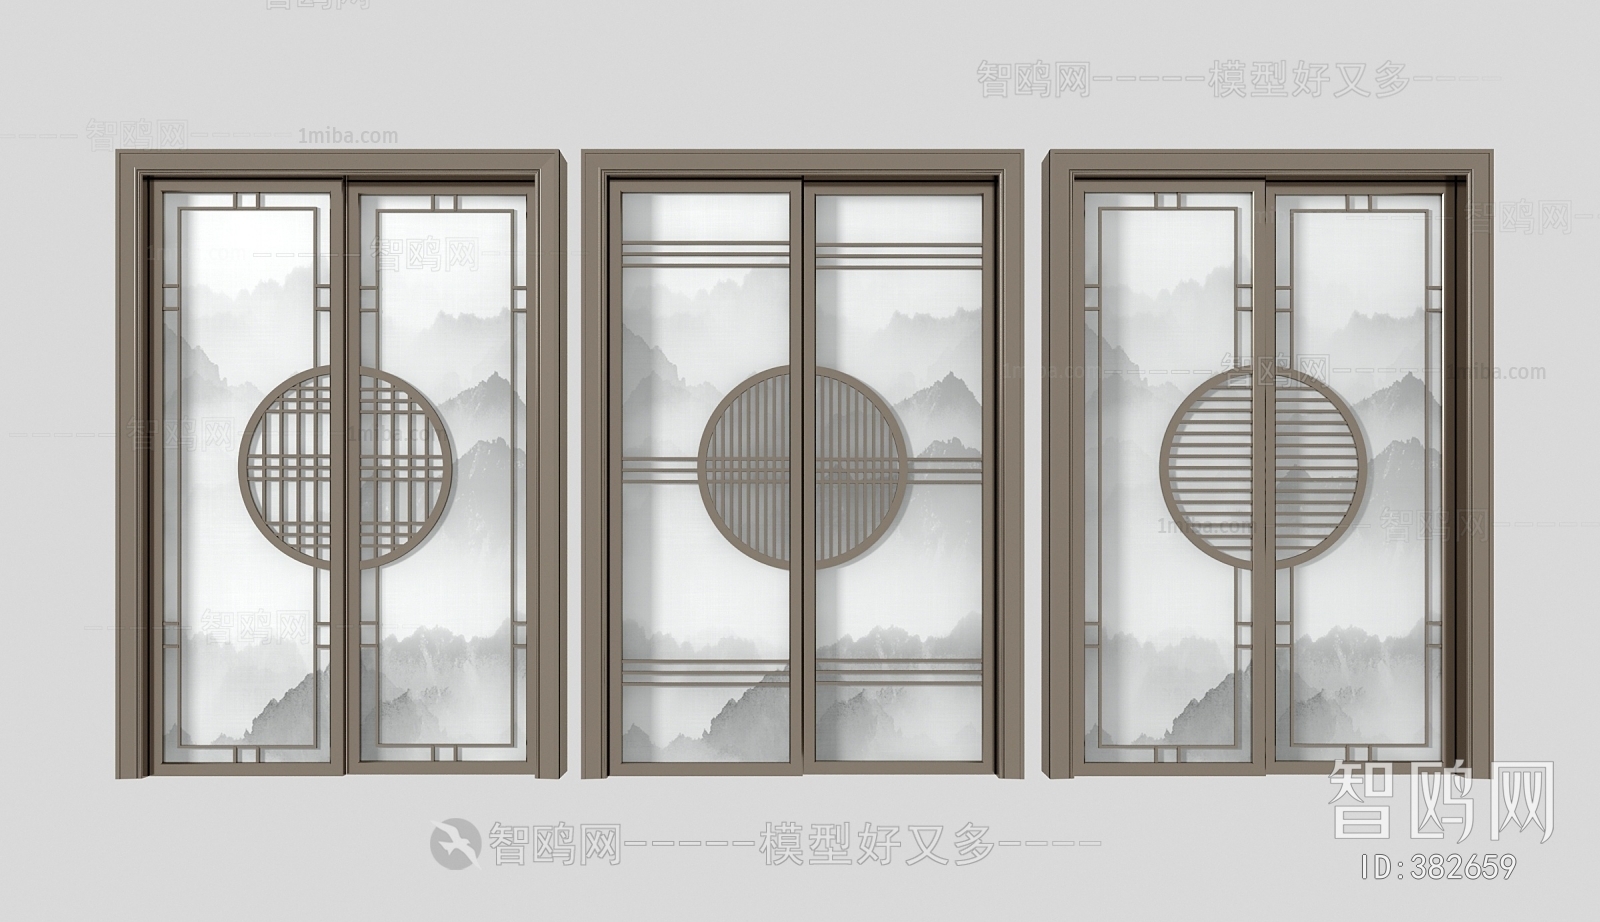 New Chinese Style Sliding Door